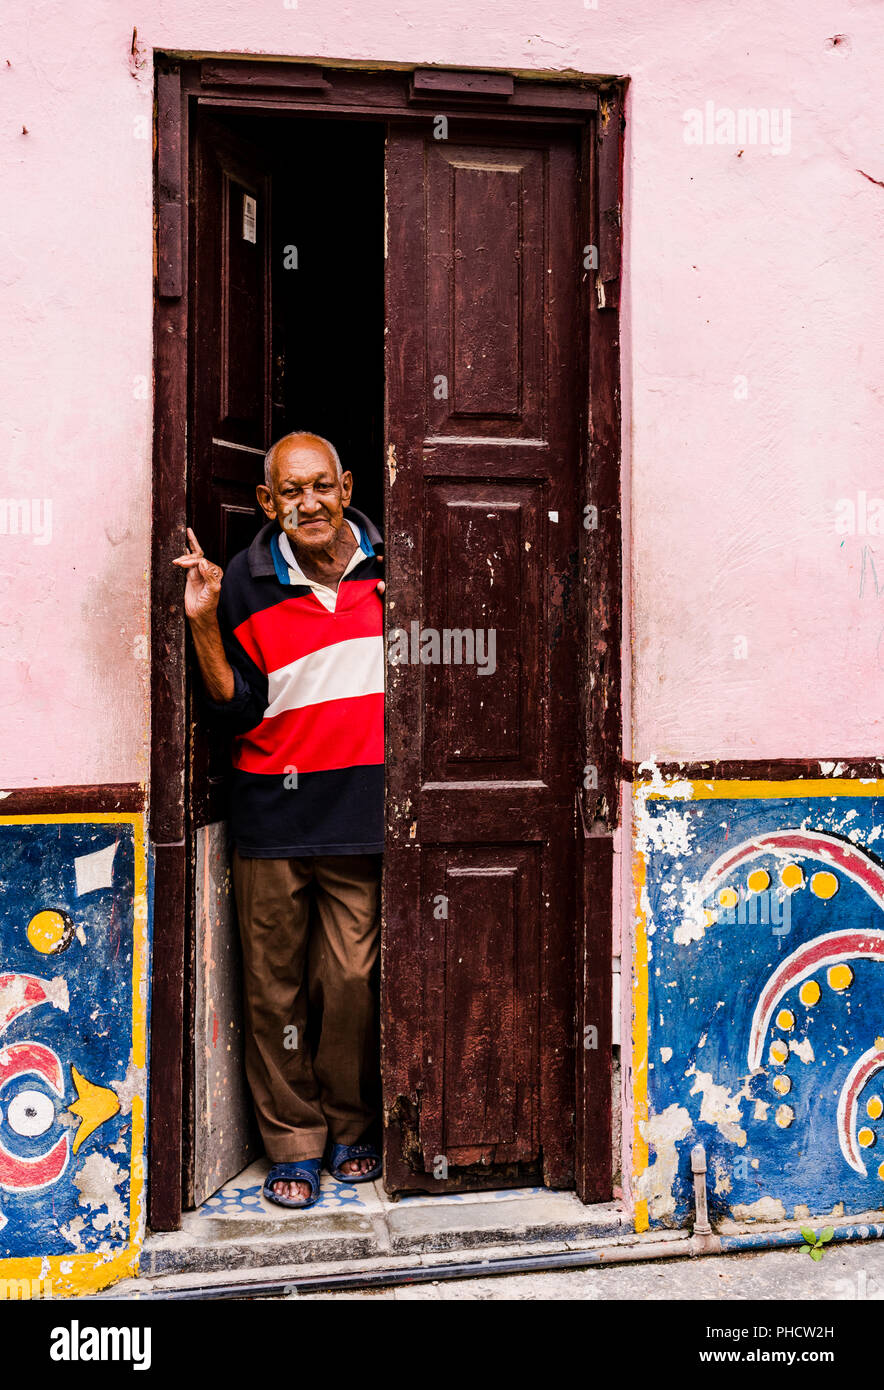 Edad hombre cubano mira a través de la puerta abierta de la casa colonial en la Habana Vieja, Cuba. Foto de stock